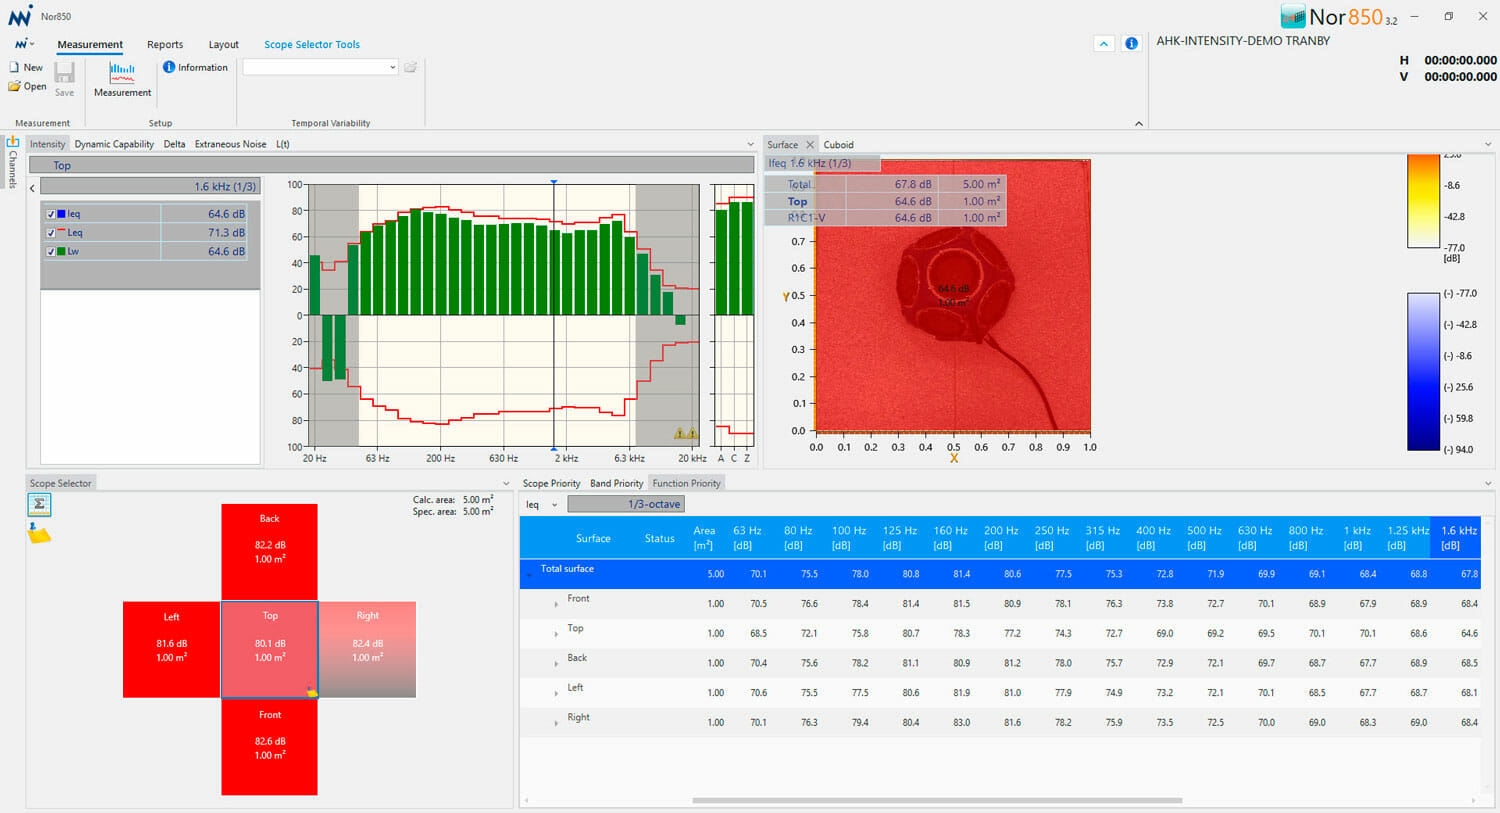 Norsonic Nor850 reporting software sound intensity screenshot